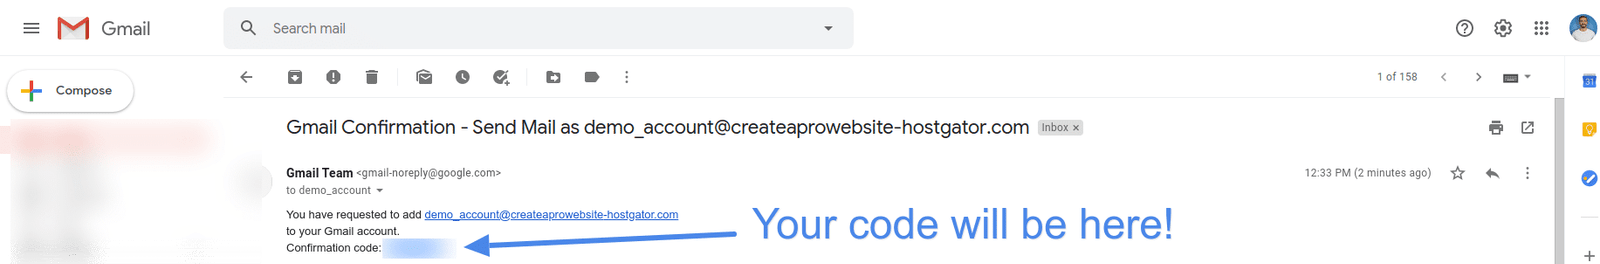 gmail custom domain confirmation code